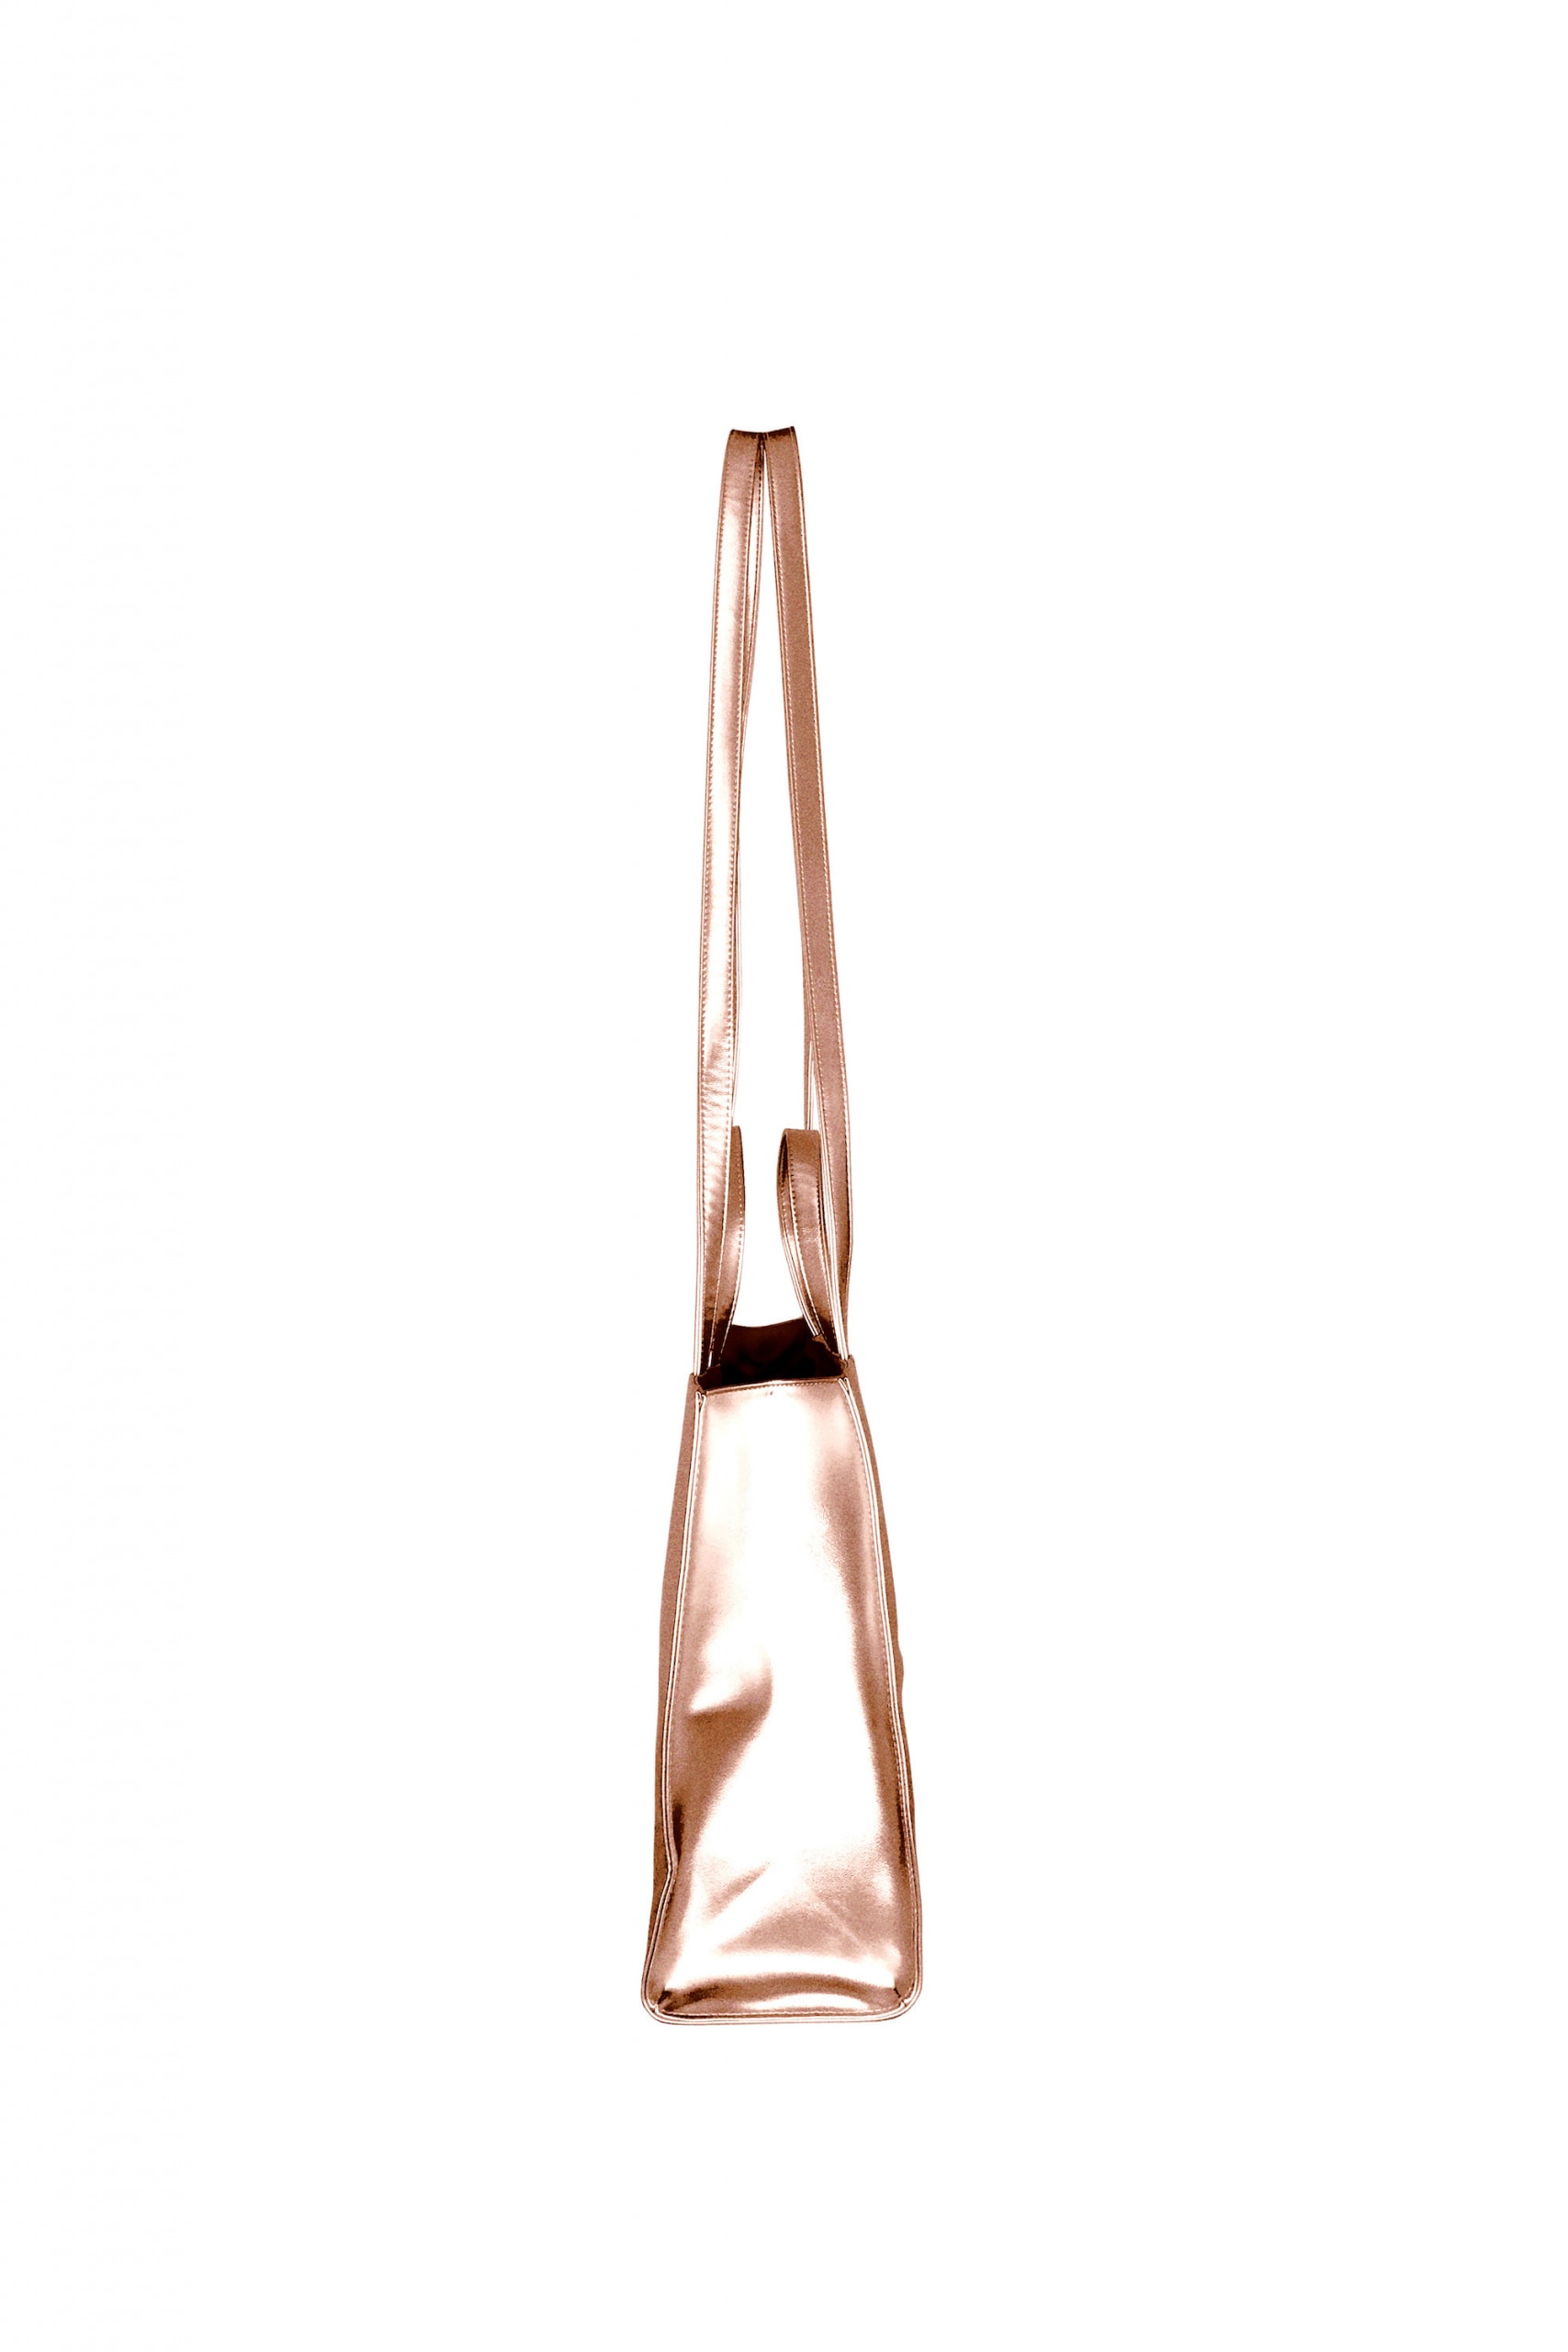 Telfar Signature Logo Tote Bag "Copper" Release Gold Shimmery Drop 